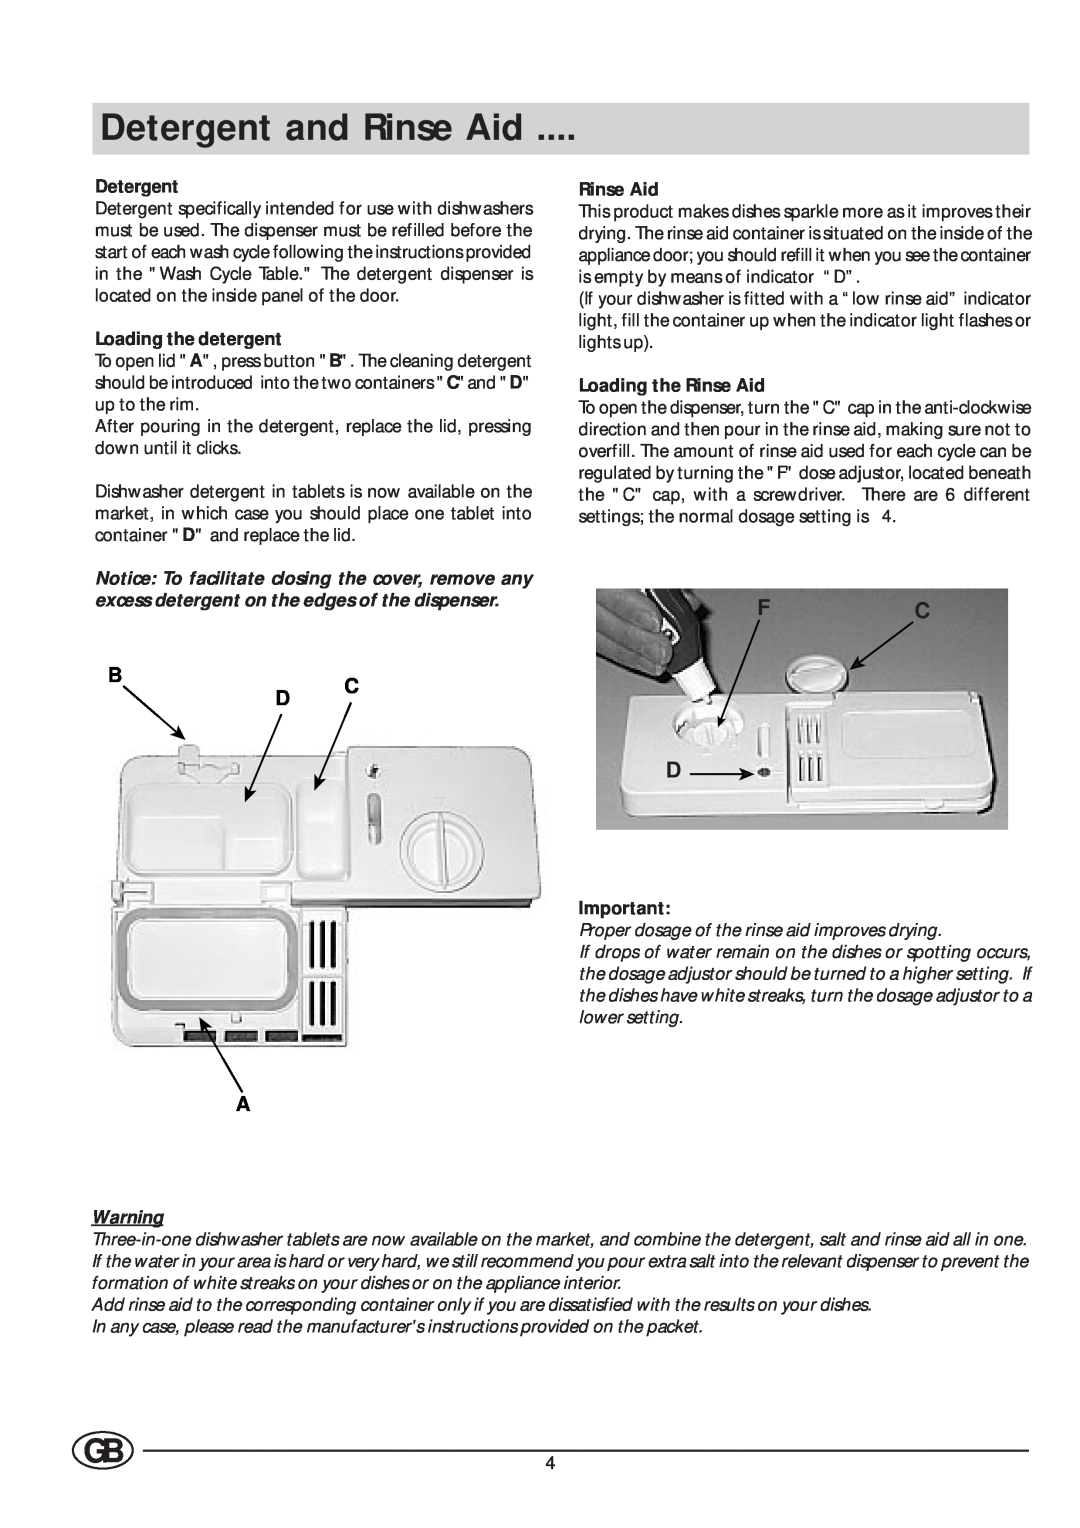 Indesit DI 620 manual Detergent and Rinse Aid, Fc D, Bc D, Loading the detergent, Loading the Rinse Aid 